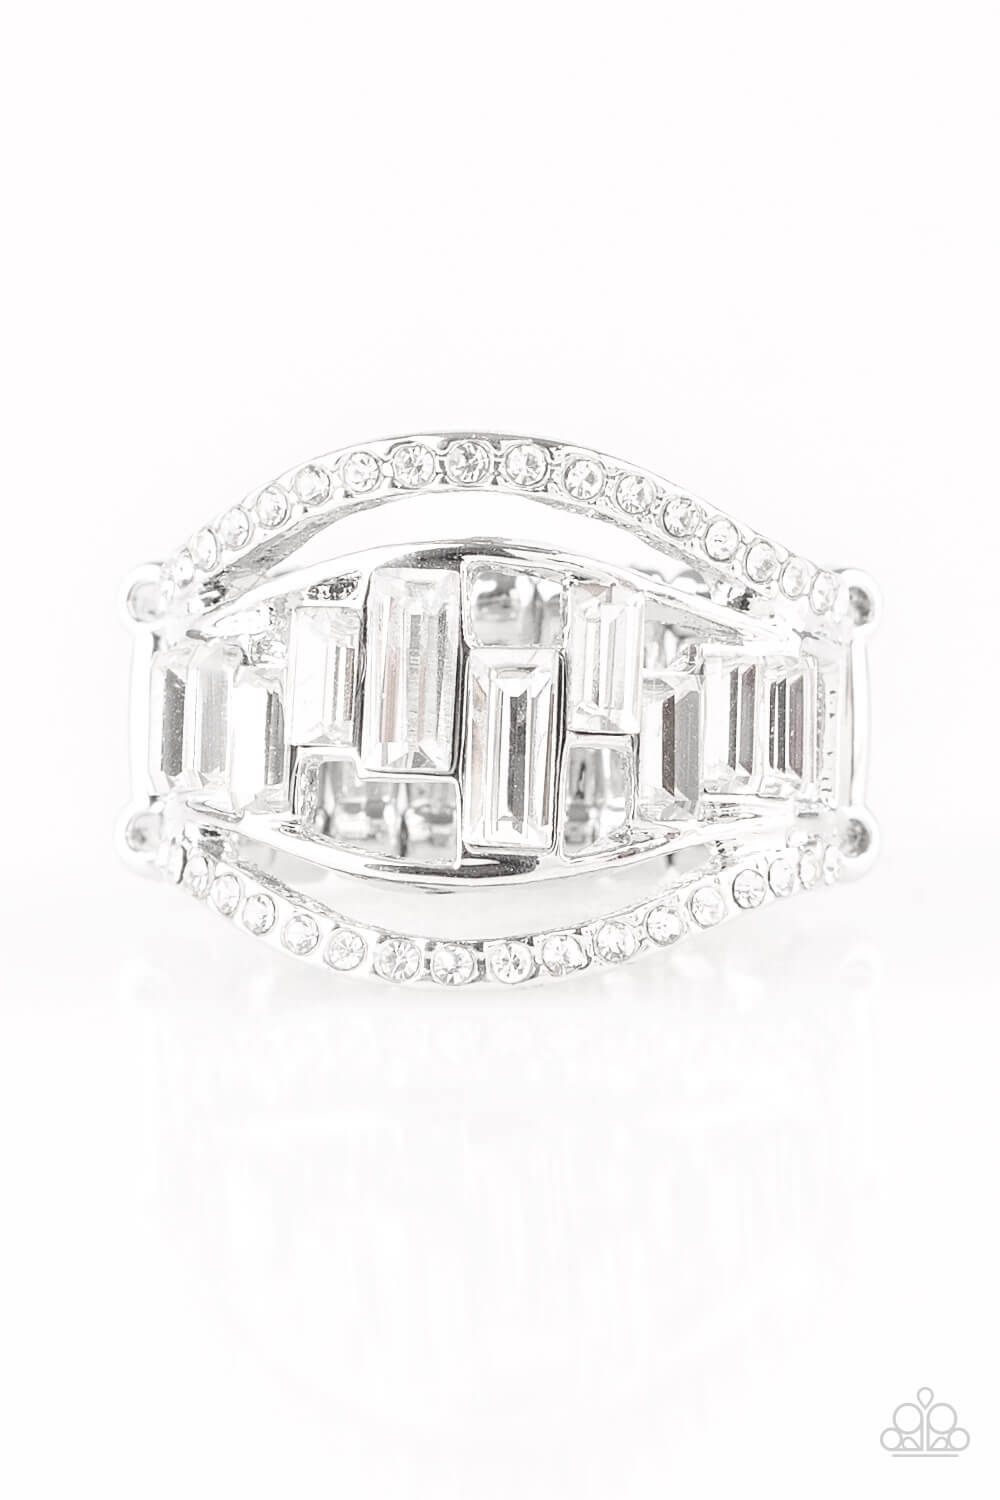 Treasure Chest Charm - White Emerald Cut Ring - Princess Glam Shop